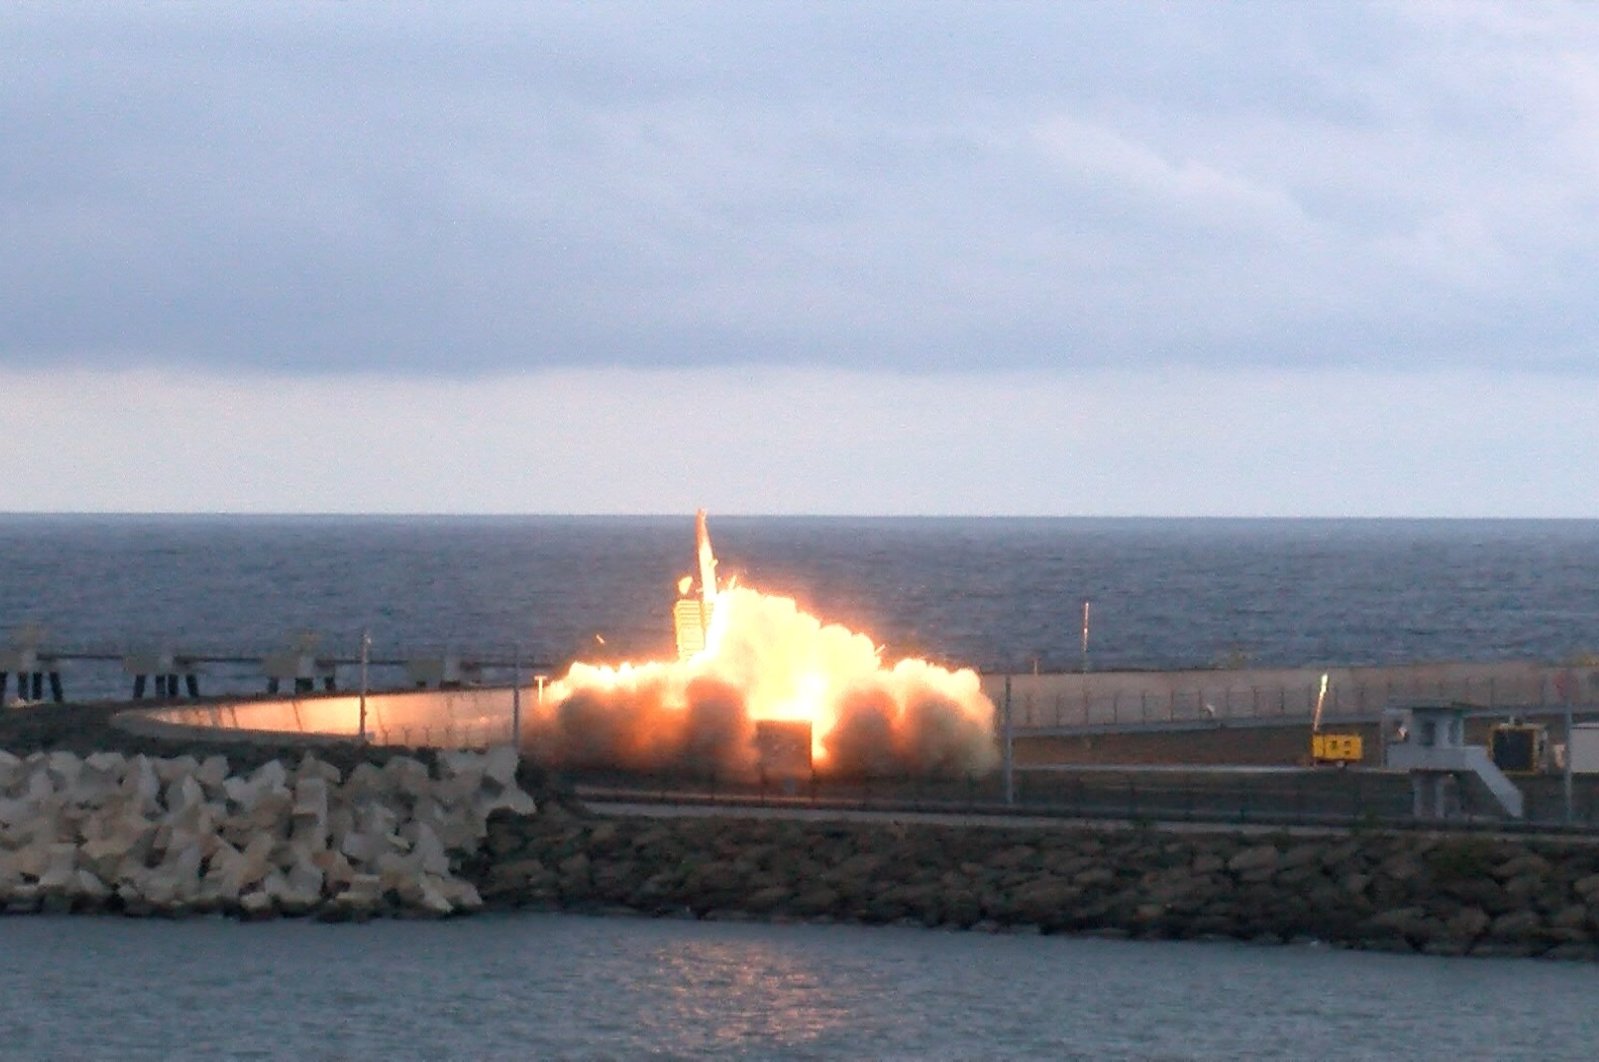 Türkiye test-fires domestic ballistic missile over Black Sea | Daily Sabah